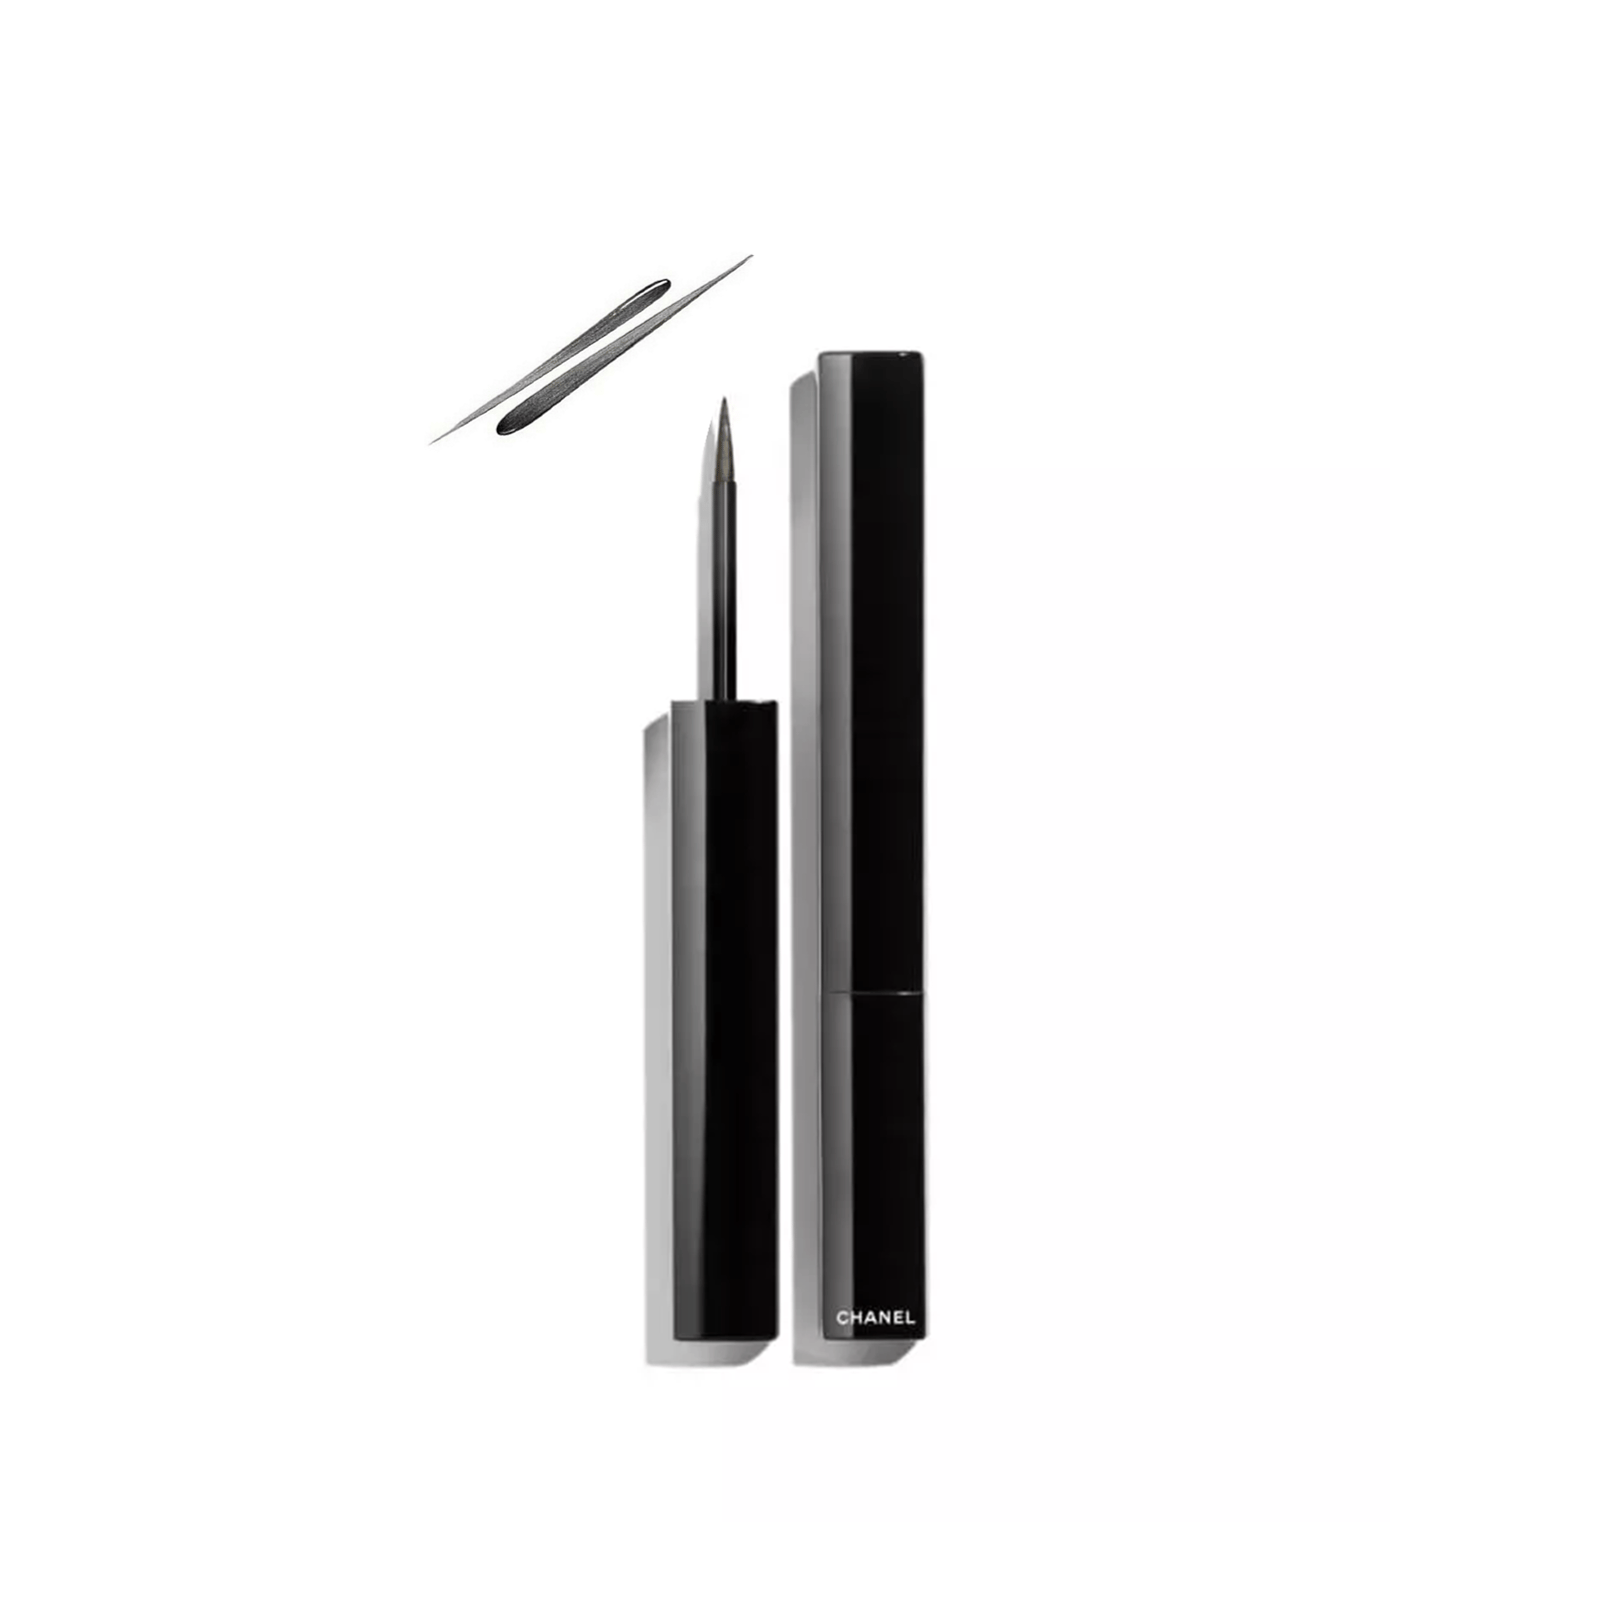 CHANEL Le Liner de Chanel Liquid Eyeliner 524 Gris Argent 2.5ml (0.08 fl oz)